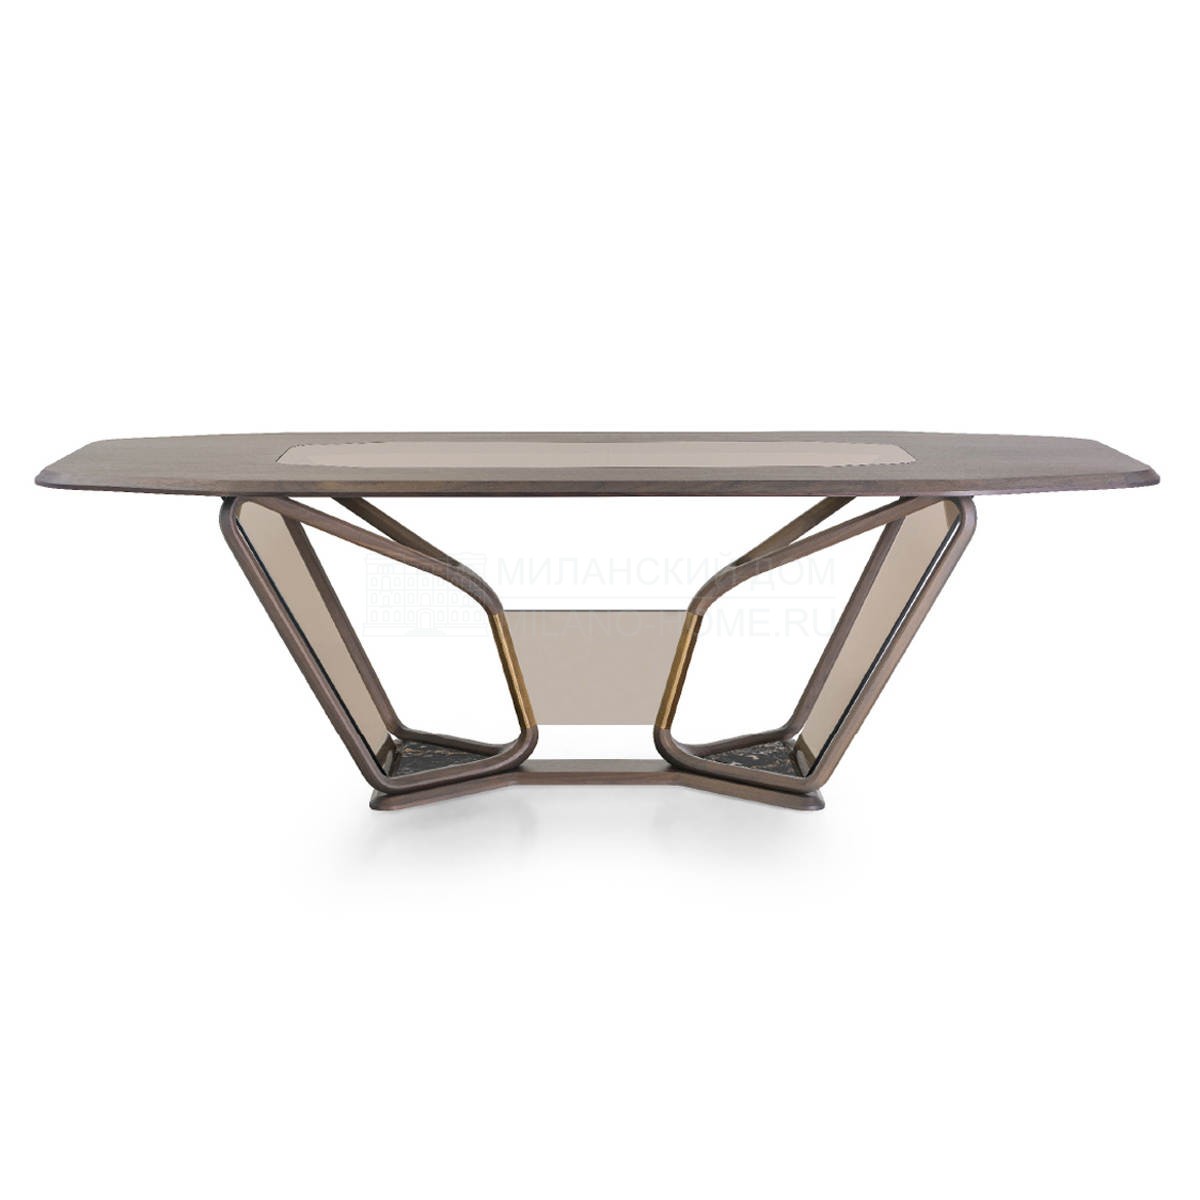 Обеденный стол Vine rectangular table из Италии фабрики TURRI